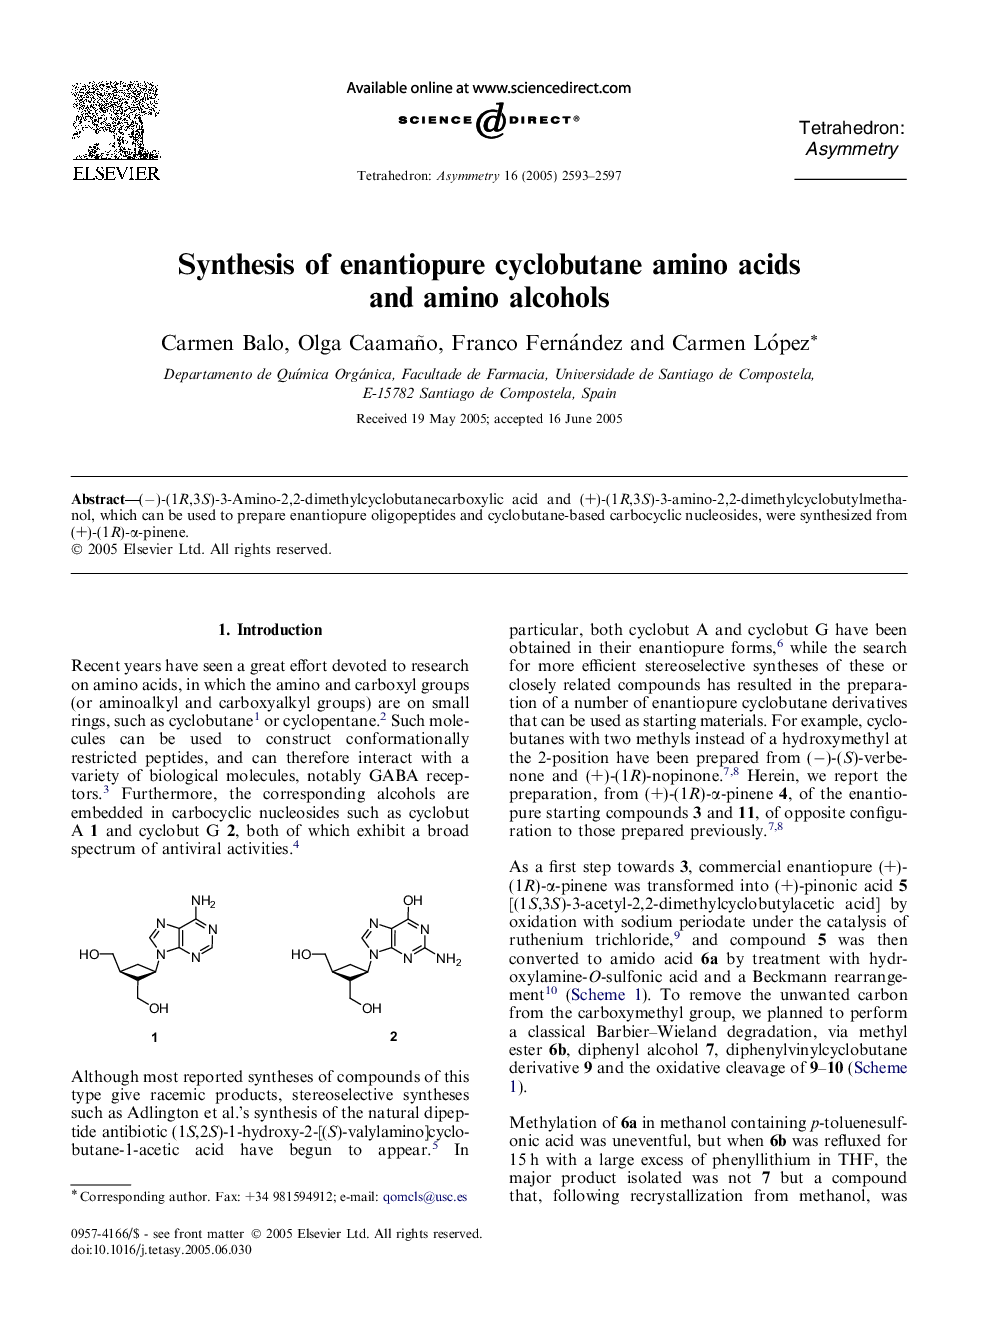 Synthesis of enantiopure cyclobutane amino acids and amino alcohols